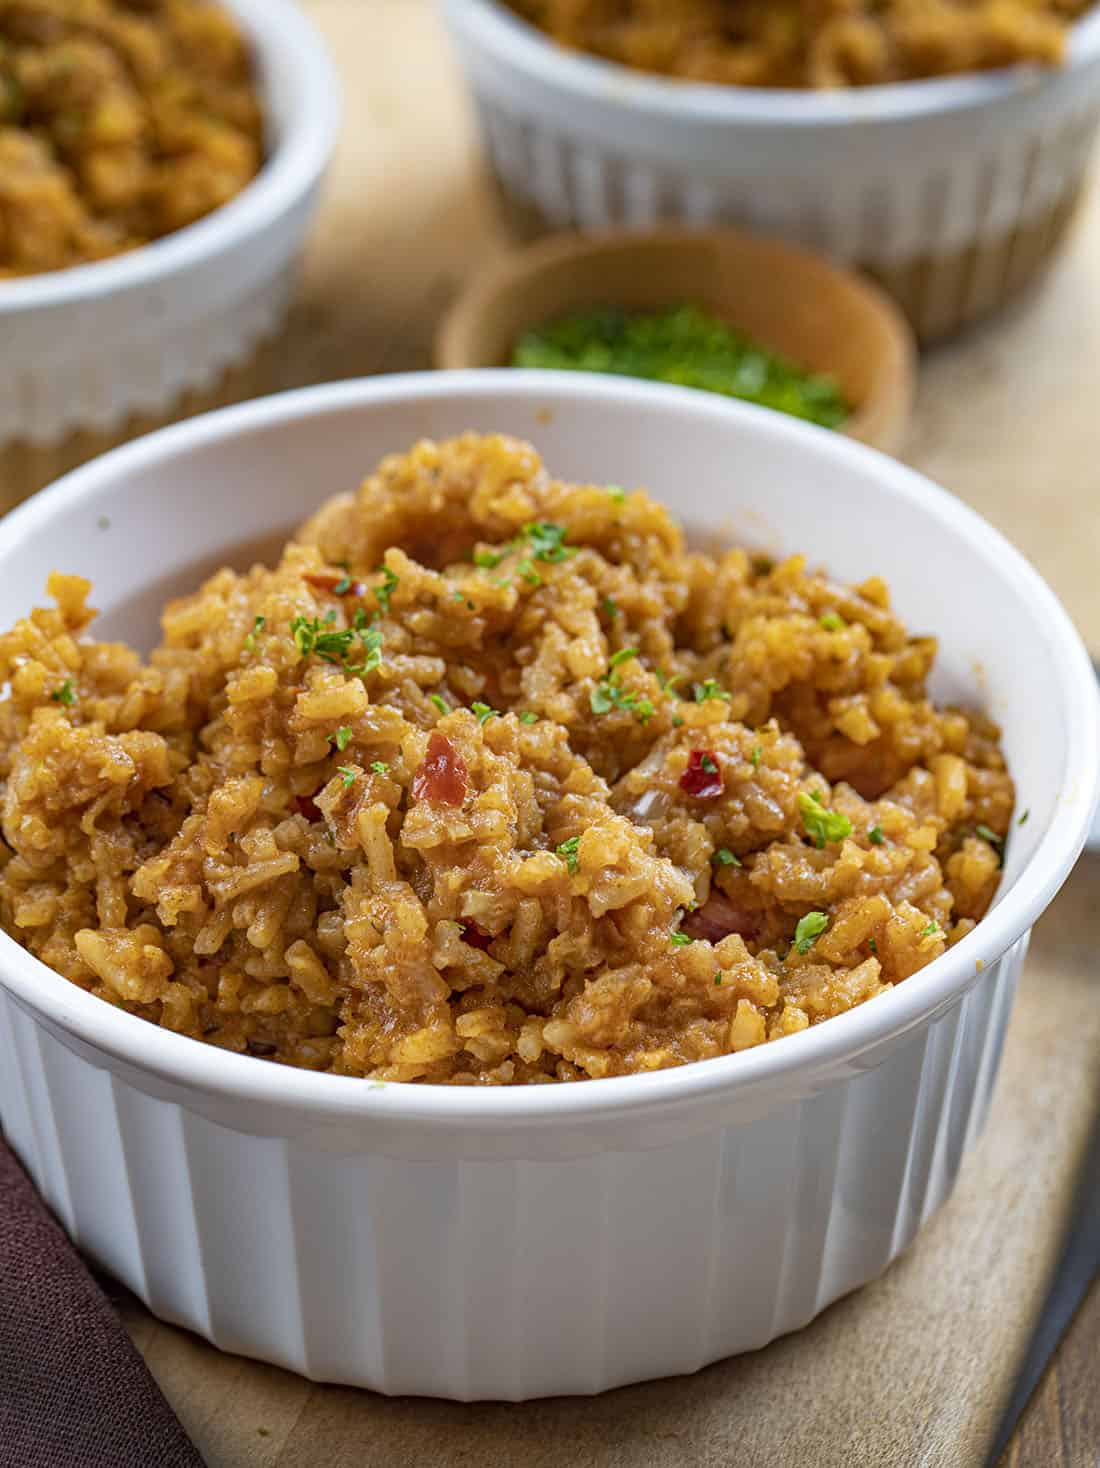 Bowls of Texas Roadhouse Seasoned Rice Copycat Recipe